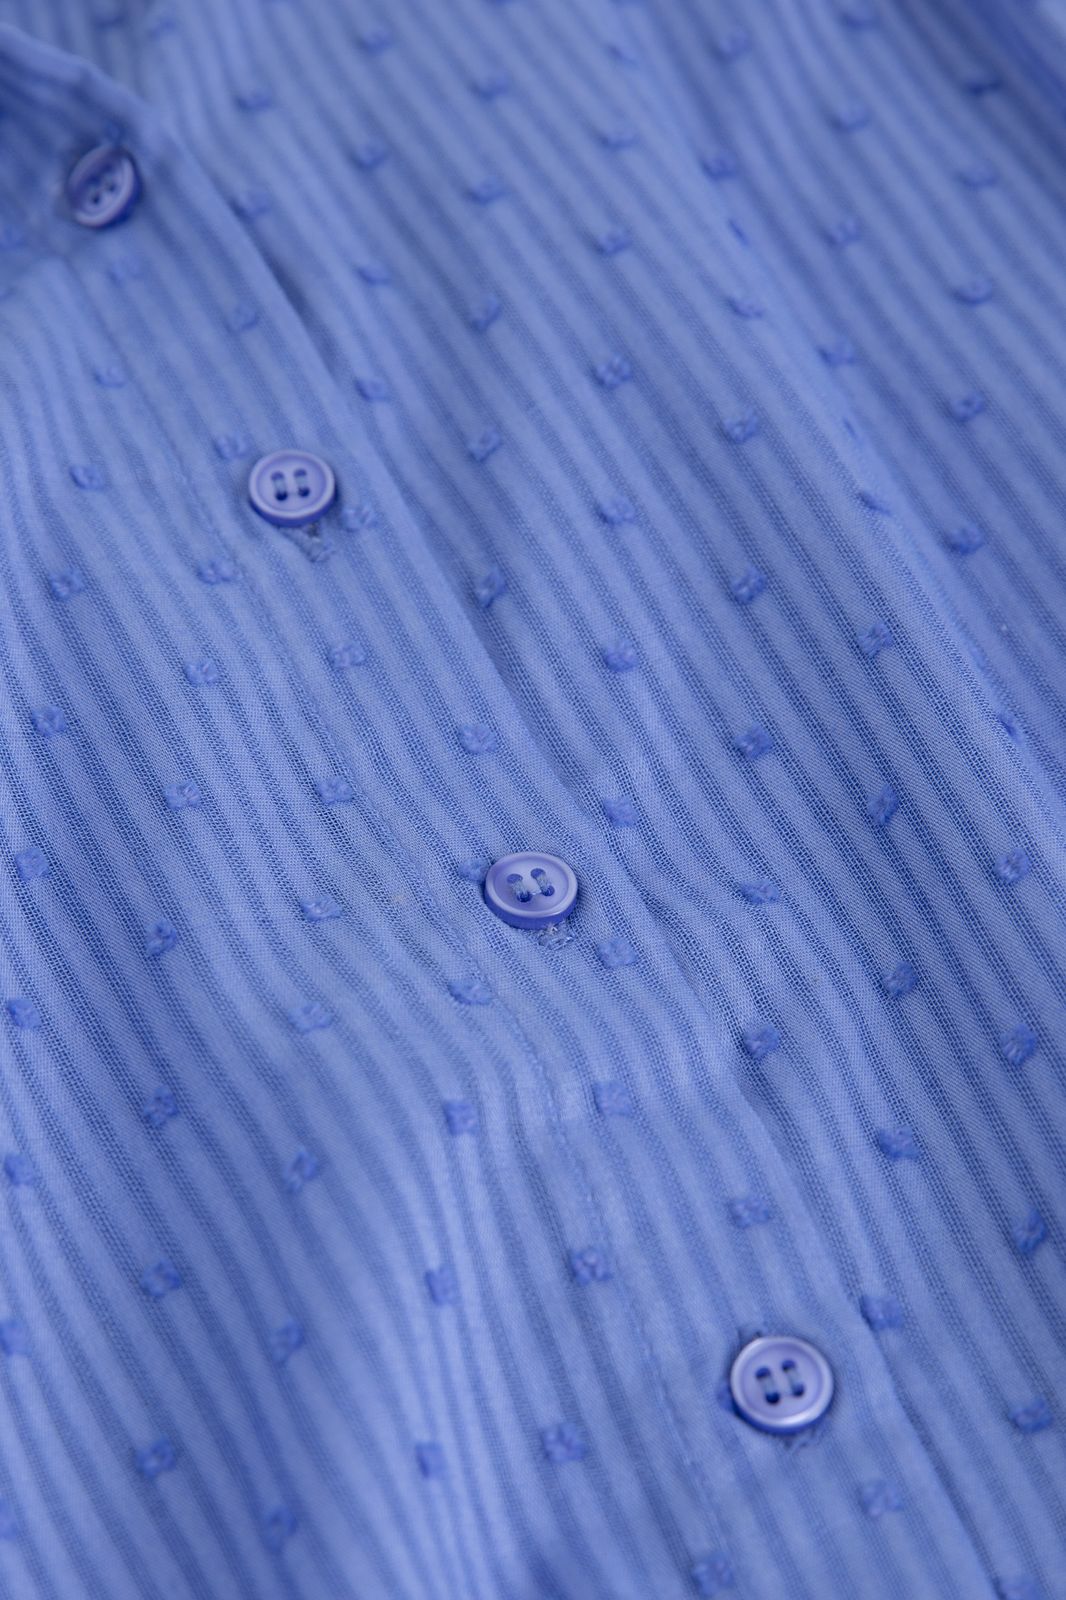 Kurzarm-Bluse mit Allover-Print - blau